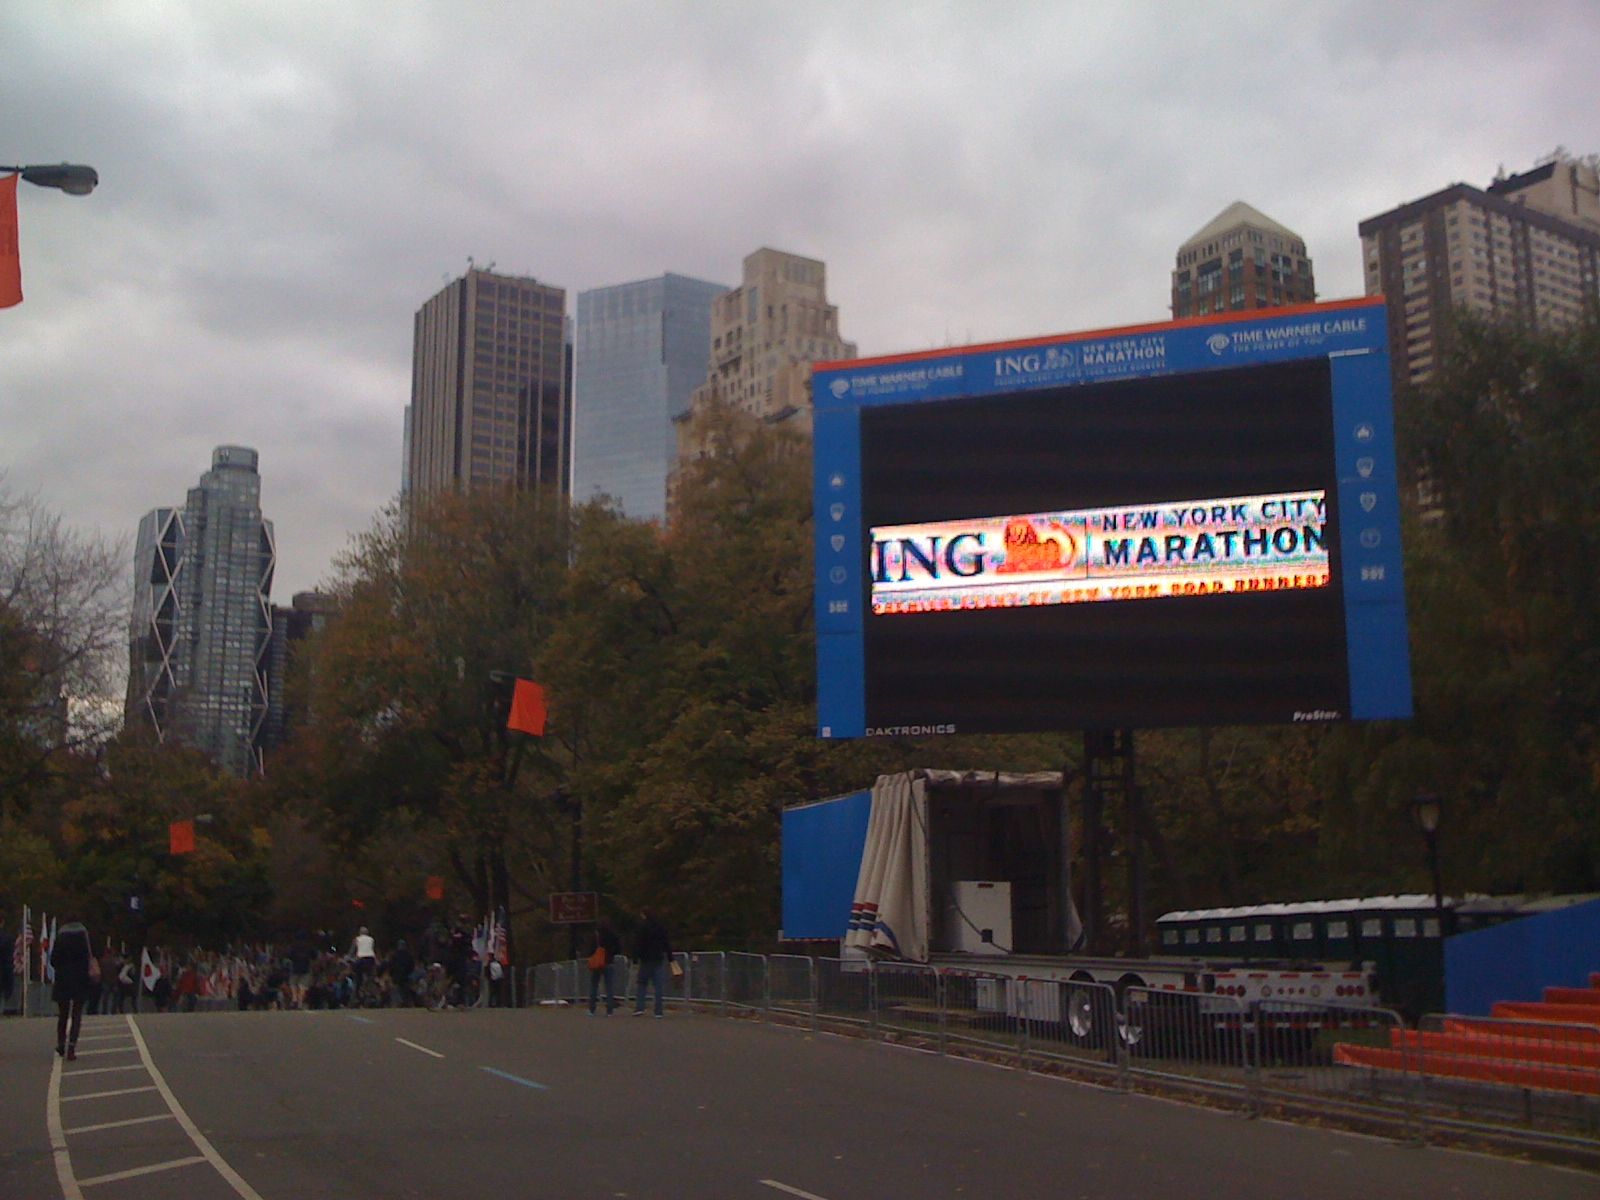 nyc marathon